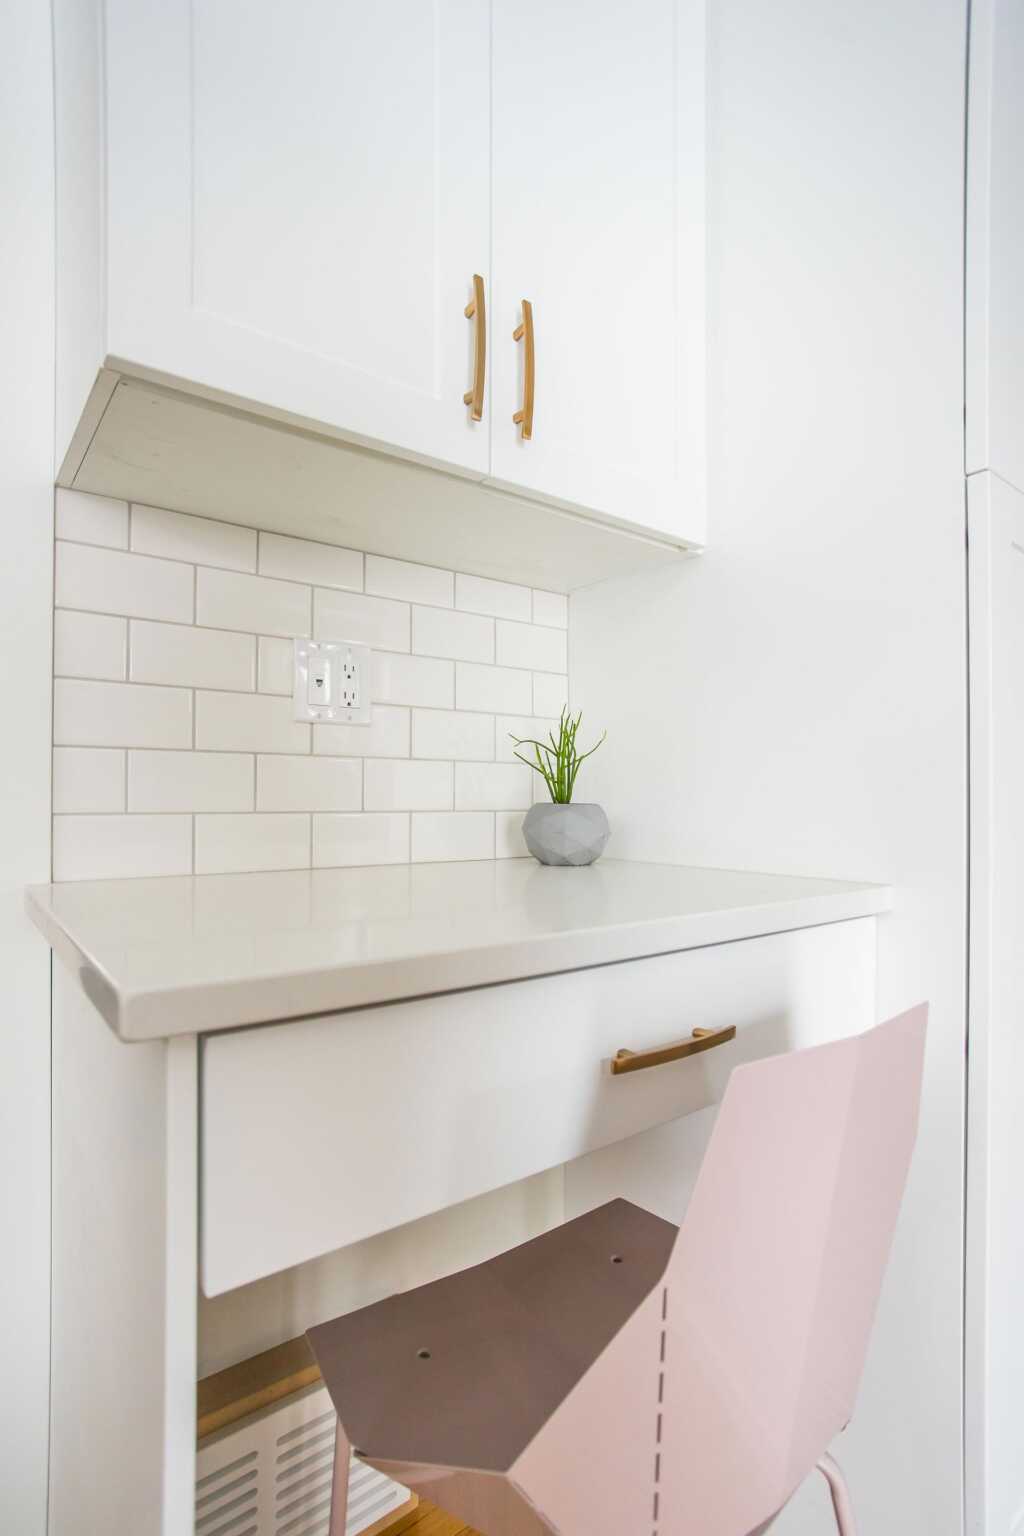 Belamour Homes - Angus Street Kitchen and Bathroom Renovation - Desk